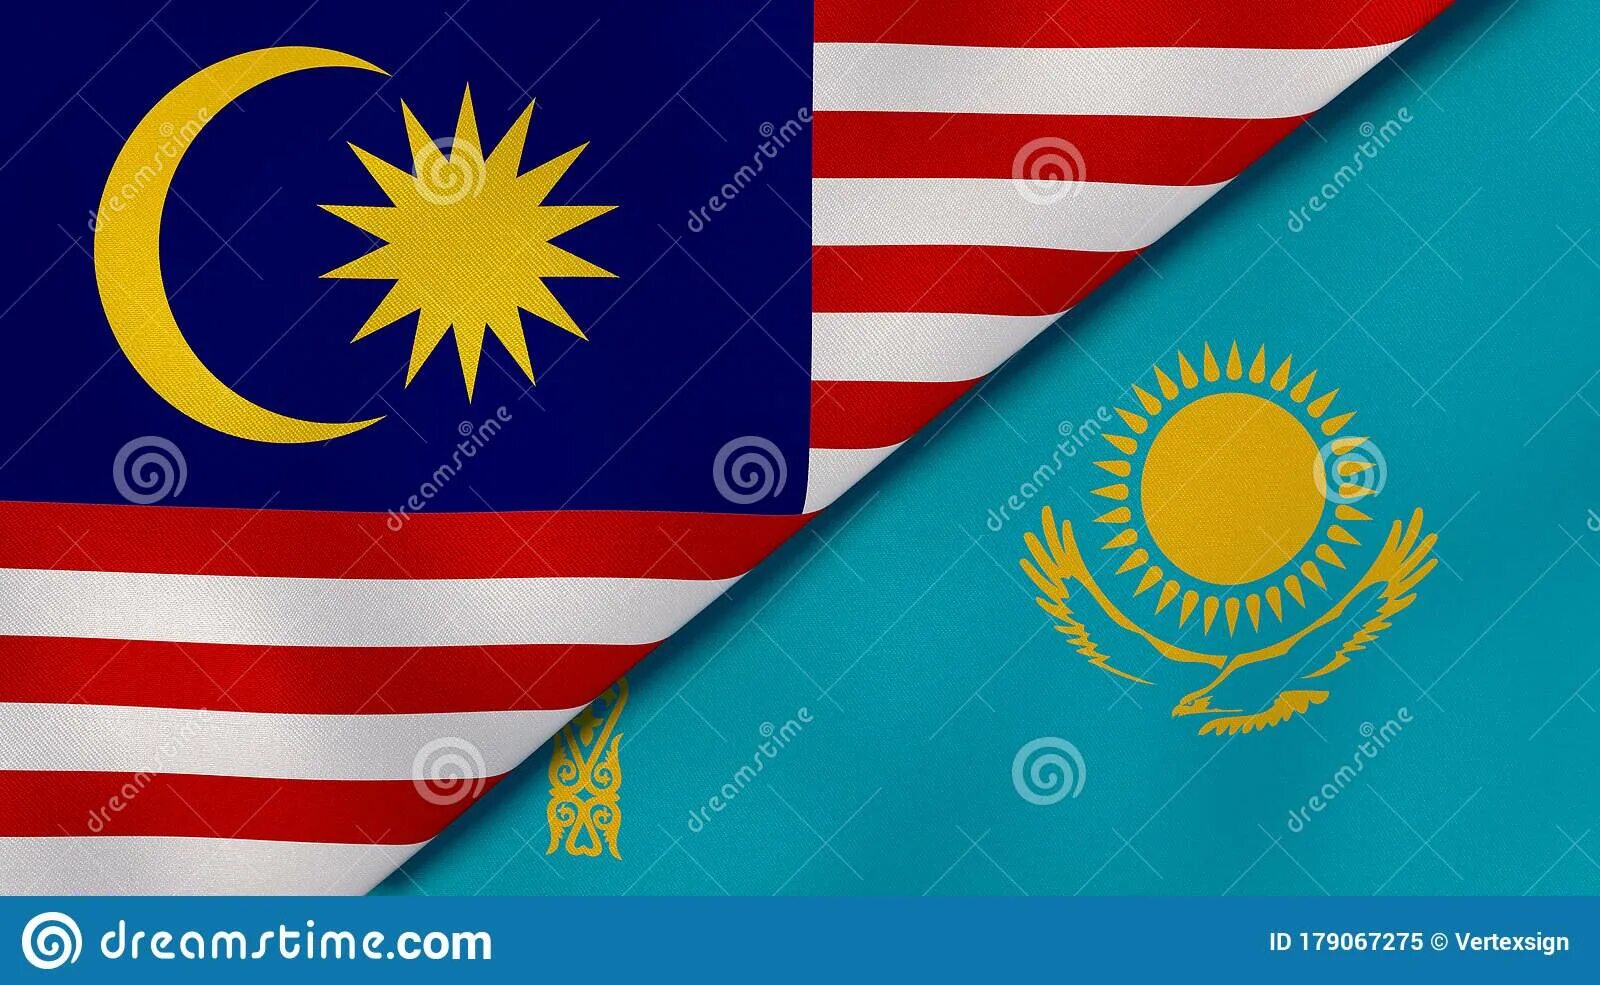 Казахстан малайзия. Флаги Казахстана и Малайзии. Флаги Казахстана и Малайзии круги. Малайзия и Россия. Почему в Малайзии два флага.